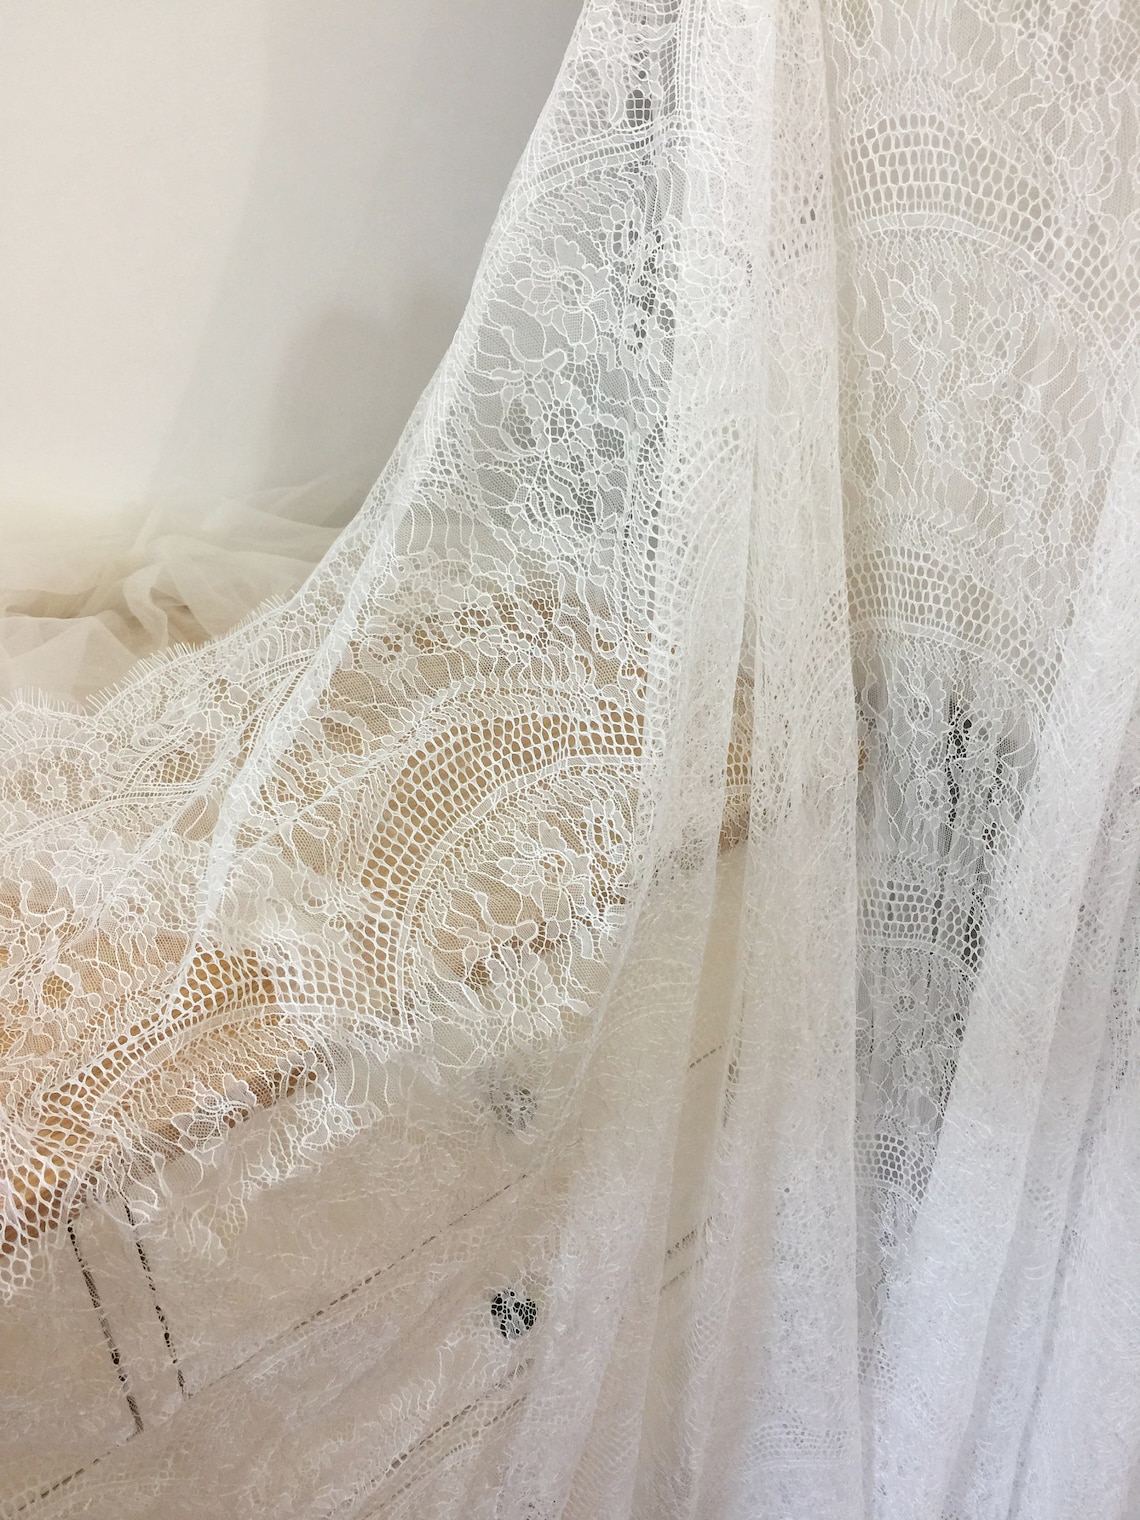 3 METER Bridal Chantilly Lace Fabric Lingerie Lace Eyelash | Etsy